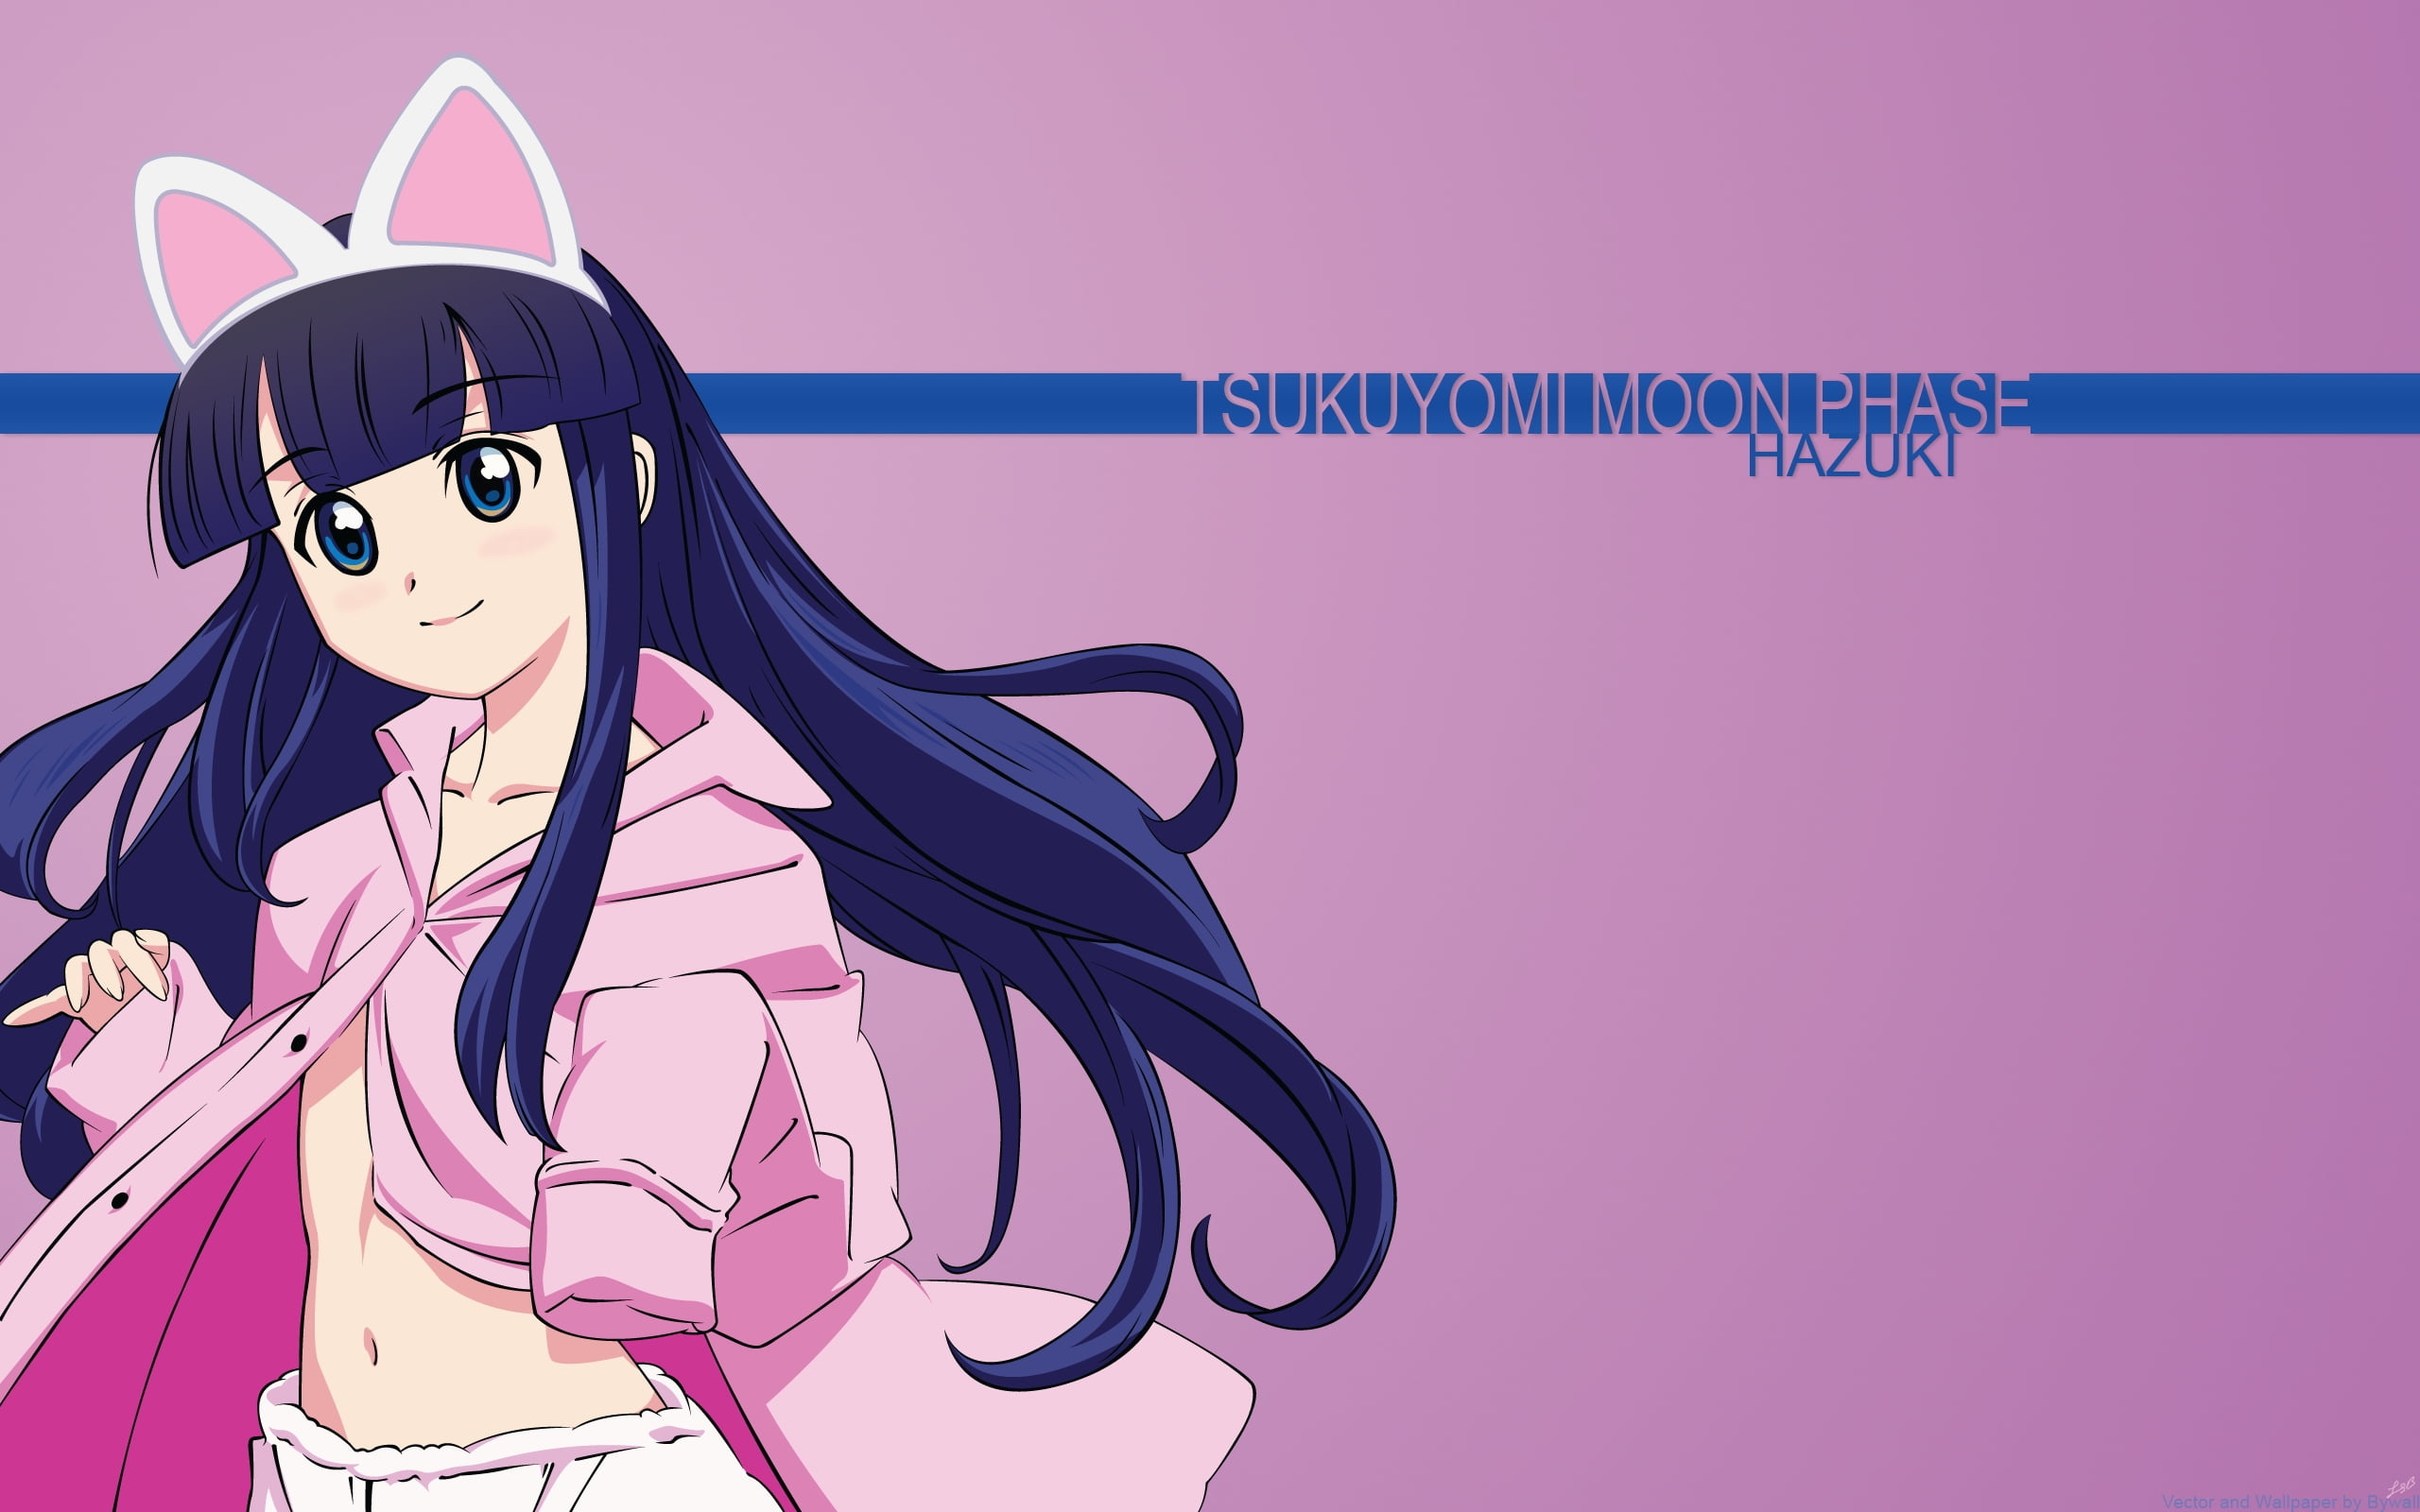 Tsukuyomi: Moon Phase, Hazuri wallpaper, Moonlit night, Anime girl, 2560x1600 HD Desktop